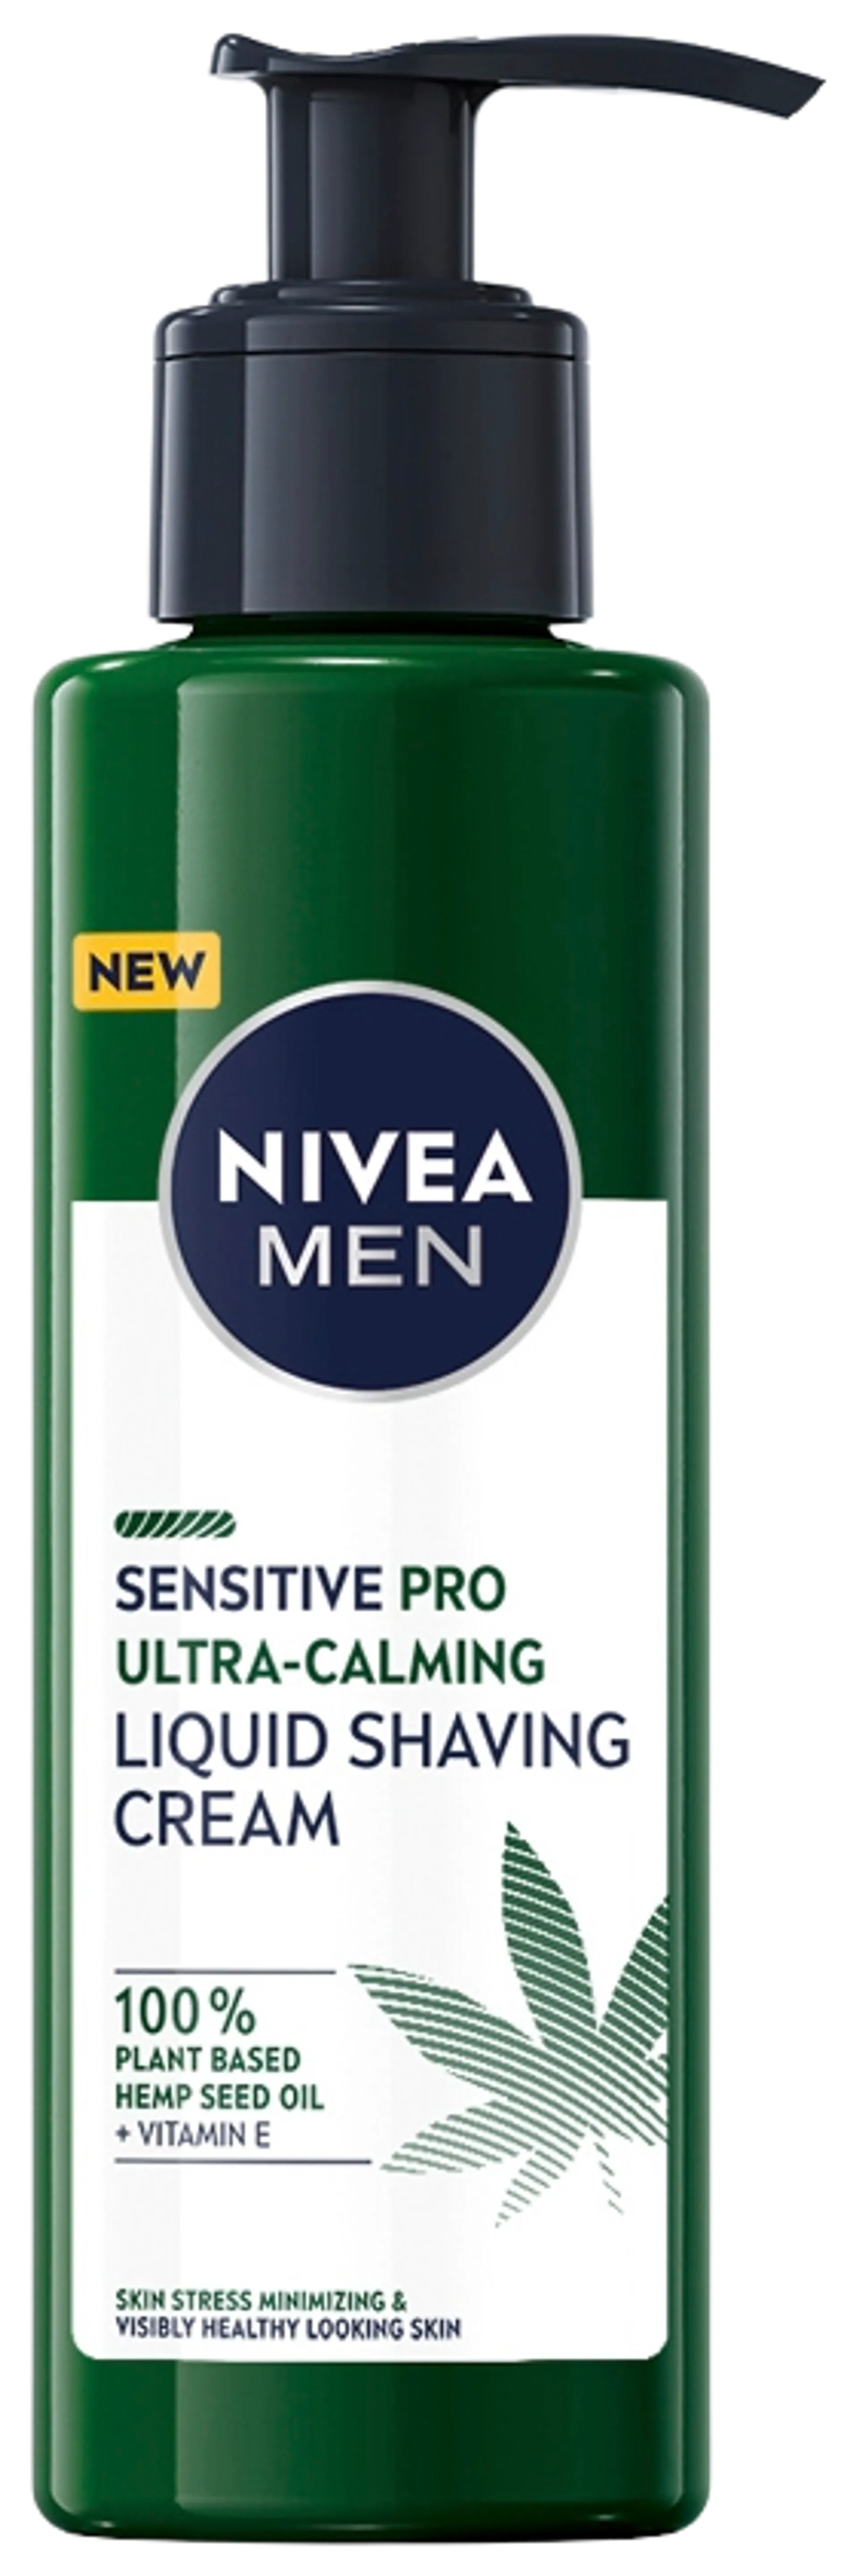 NIVEA MEN 200ml Sensitive Pro Liquid Shaving Cream -parranajoneste